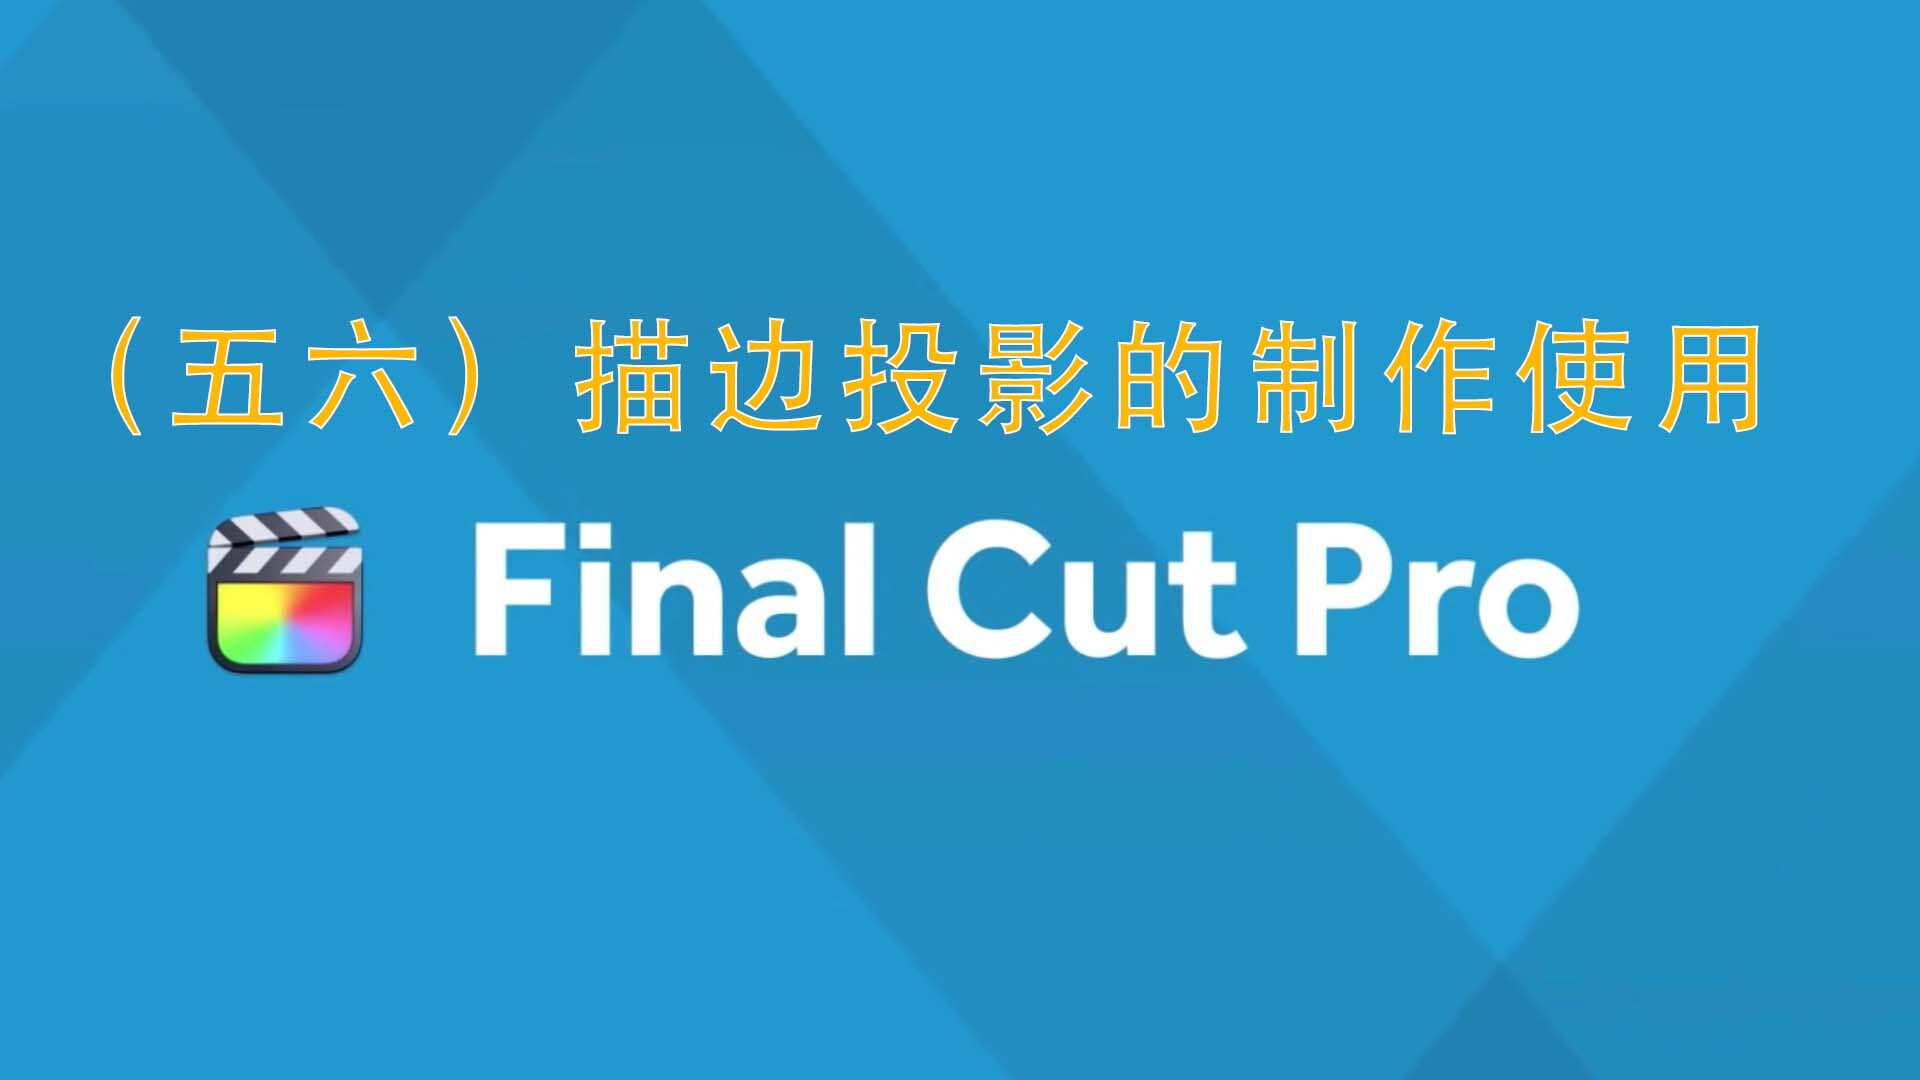 Final Cut Pro中文新手教程 (56) 描边投影的制作使用